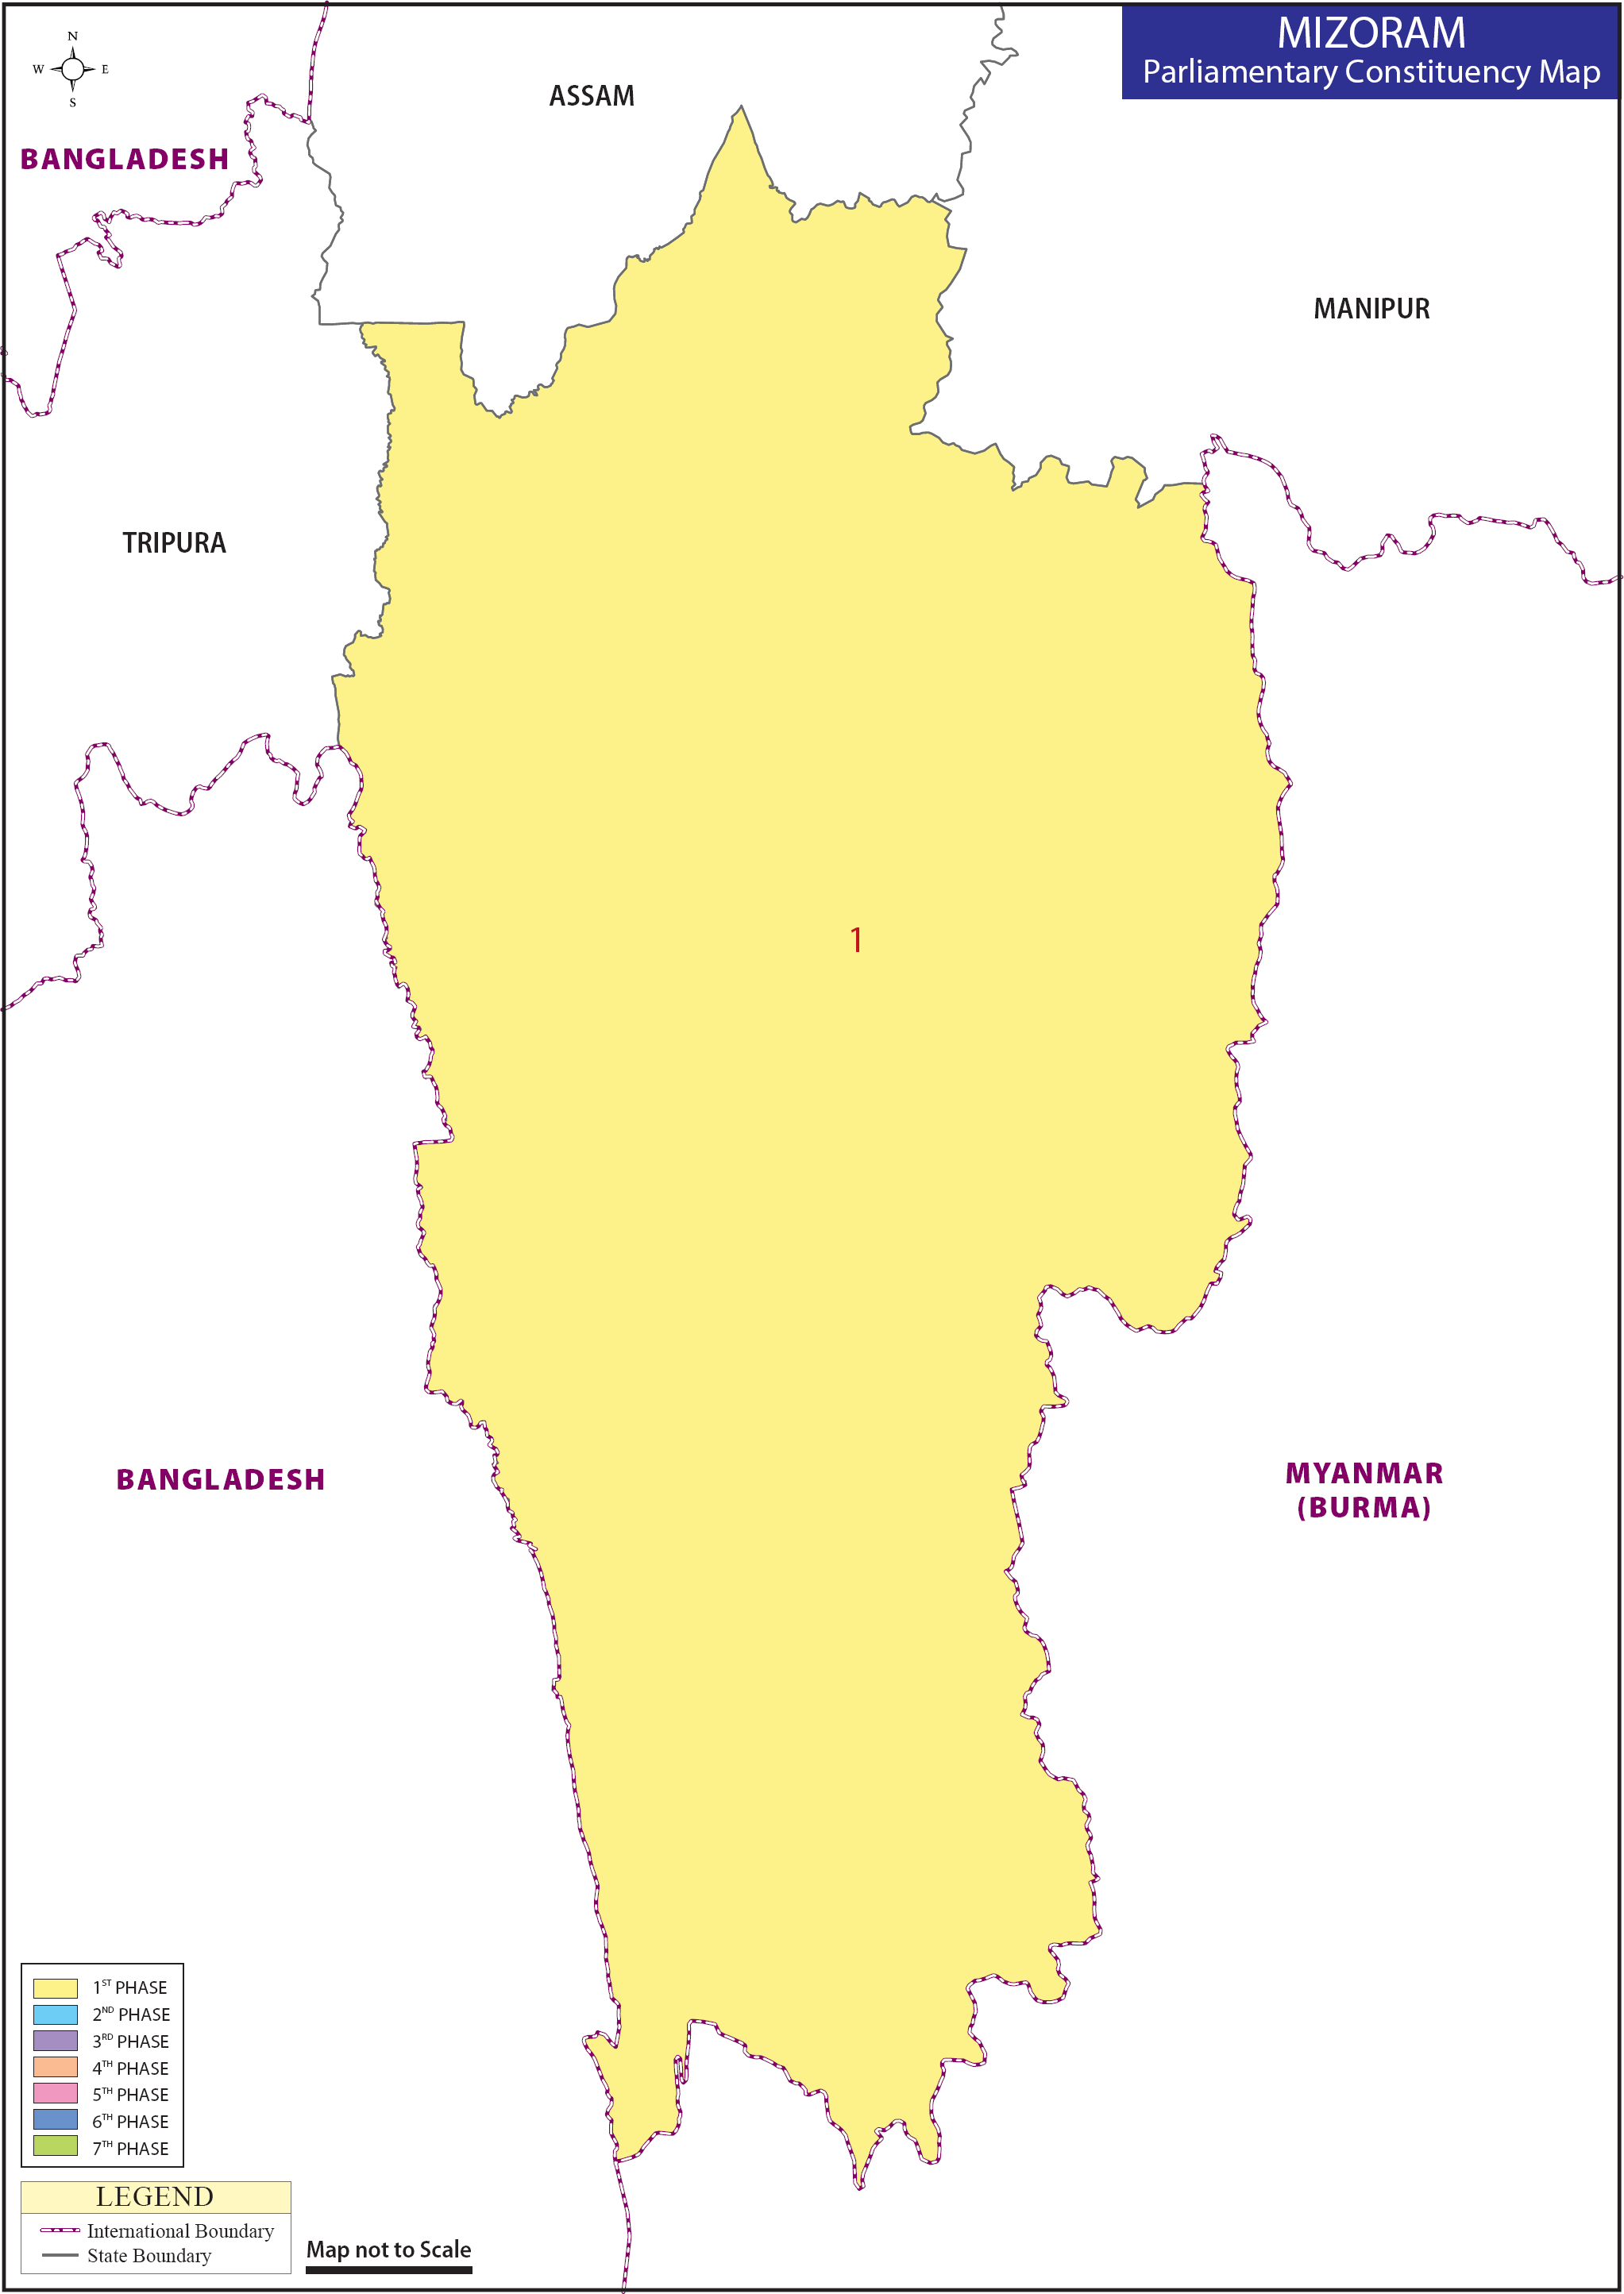 Mizoram Parliamentary Constituency Map